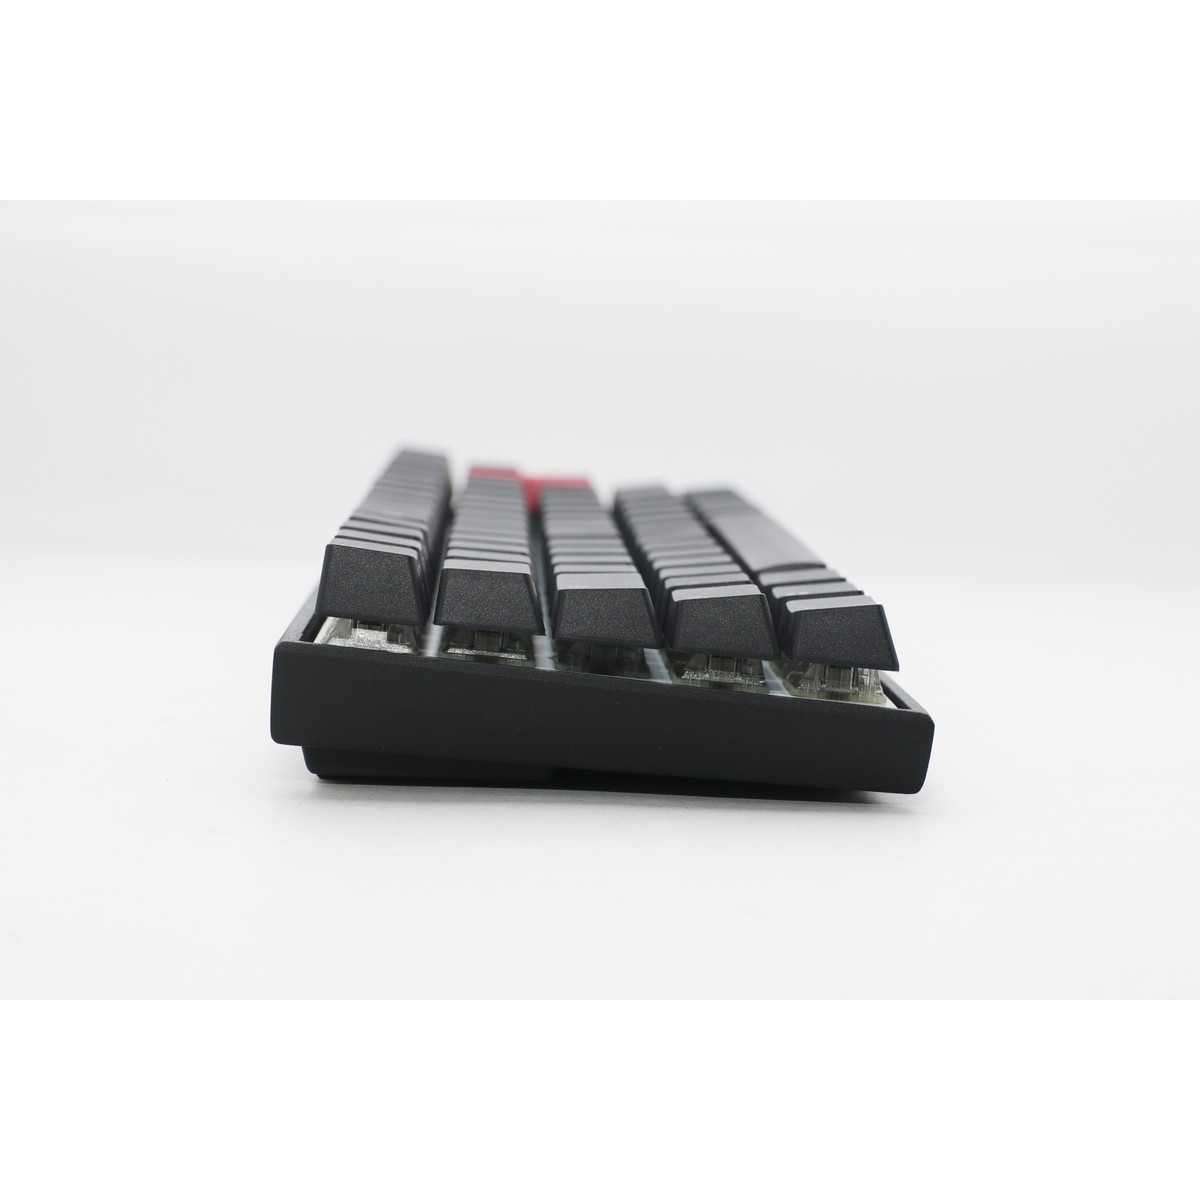 Ducky - Ducky Mecha Pro SF 65% USB RGB Mechanical Gaming Keyboard Cherry MX Silent Red -